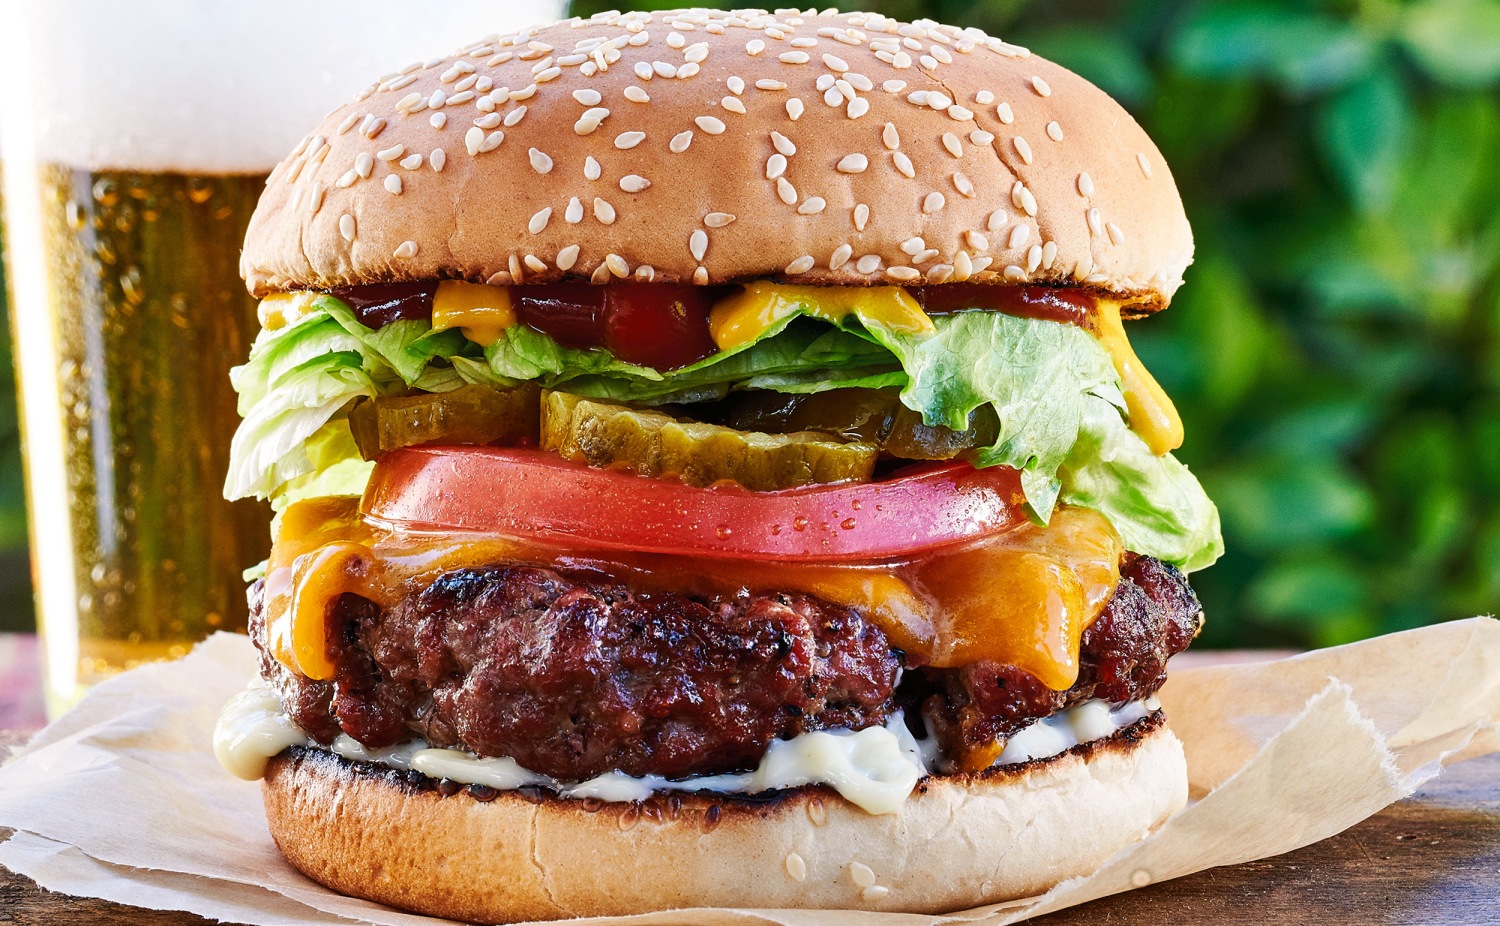 https://media-cldnry.s-nbcnews.com/image/upload/t_fit-1500w,f_auto,q_auto:best/newscms/2019_21/2870431/190524-classic-american-cheeseburger-ew-207p.jpg